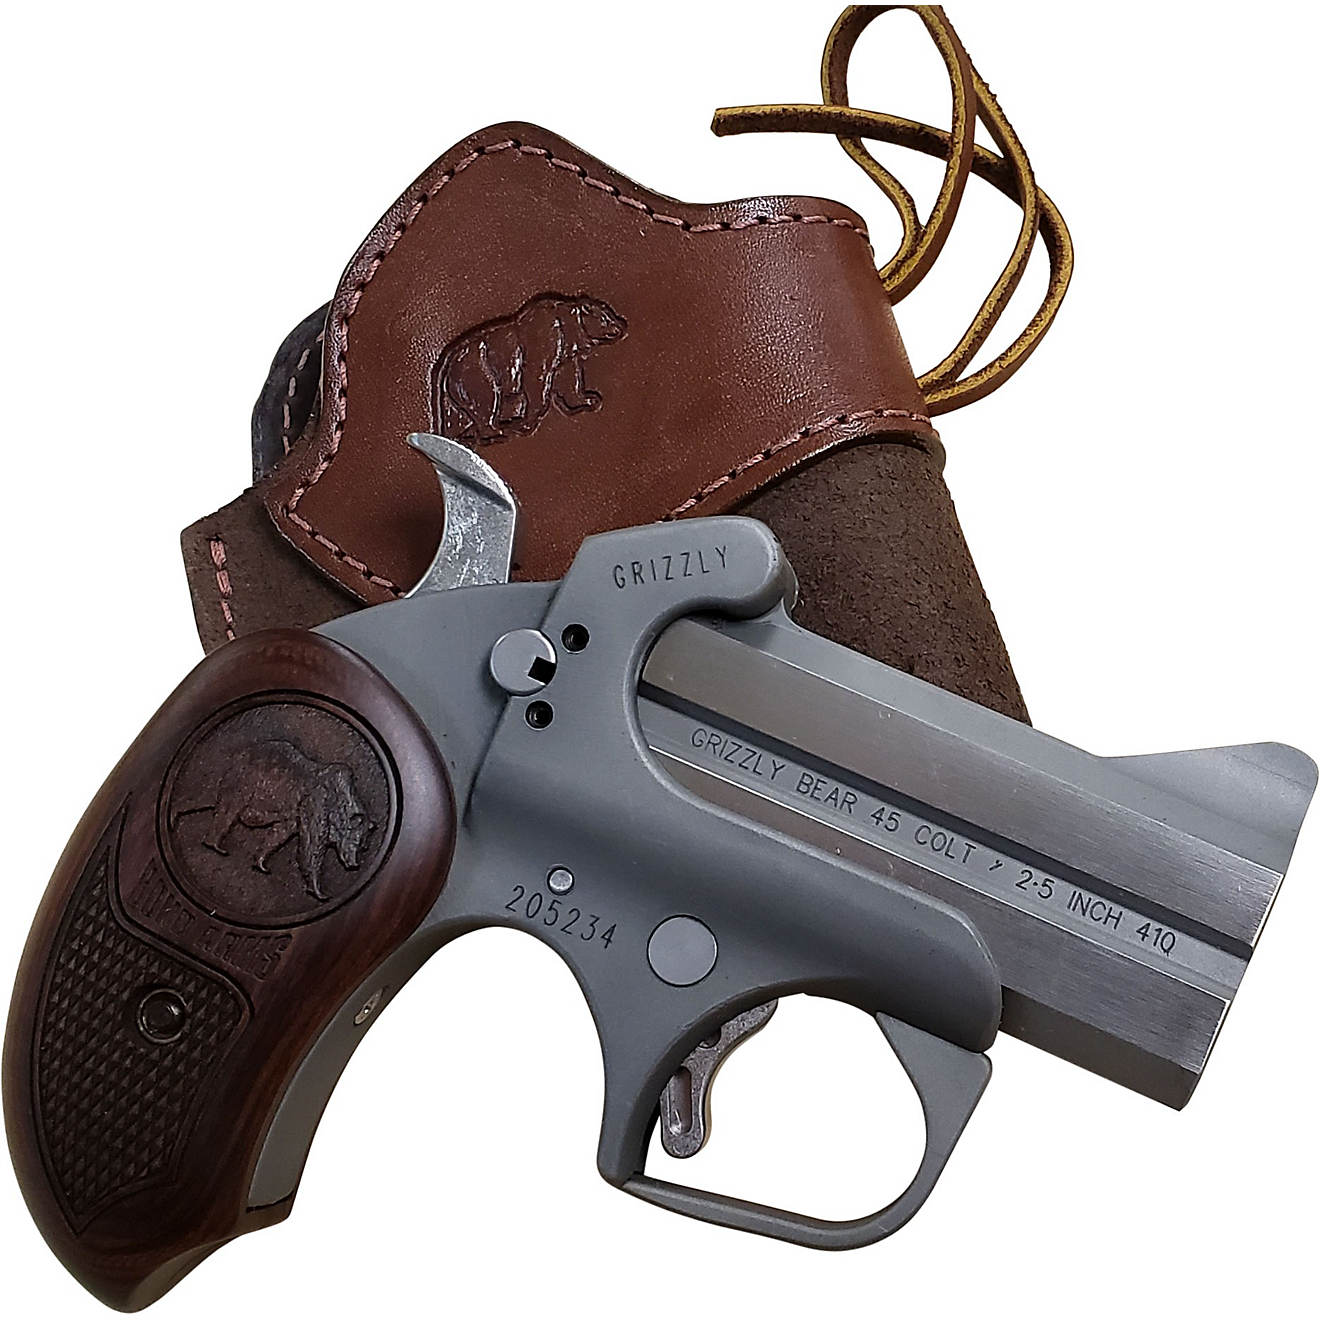 Bond Arms Grizzly 45 Colt LC .410 Gauge Centerfire Pistol                                                                        - view number 1